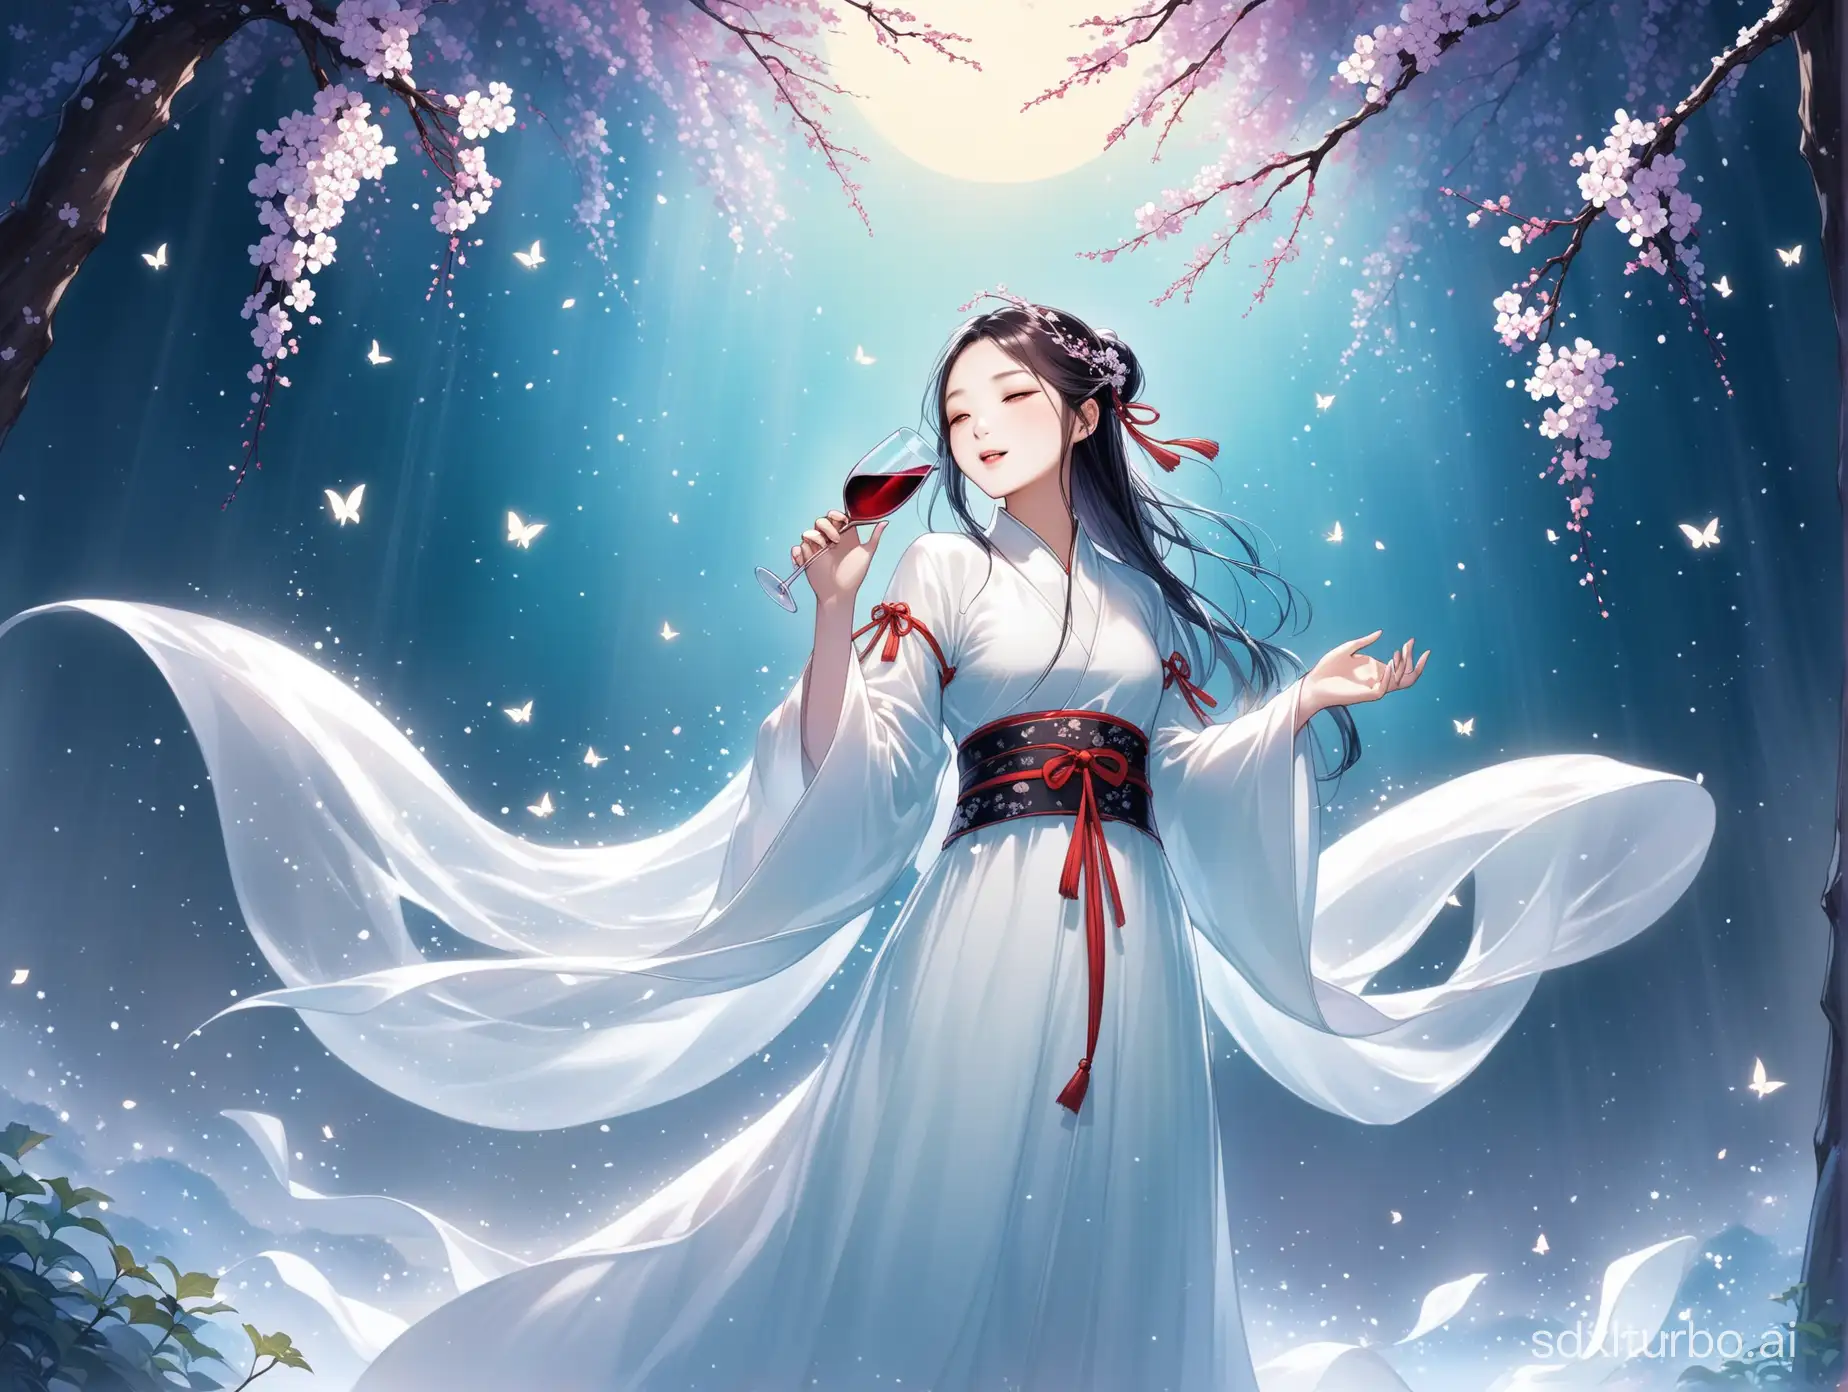 Li-Bai-Poetry-Ethereal-Serenade-to-Wine-in-Fairyland